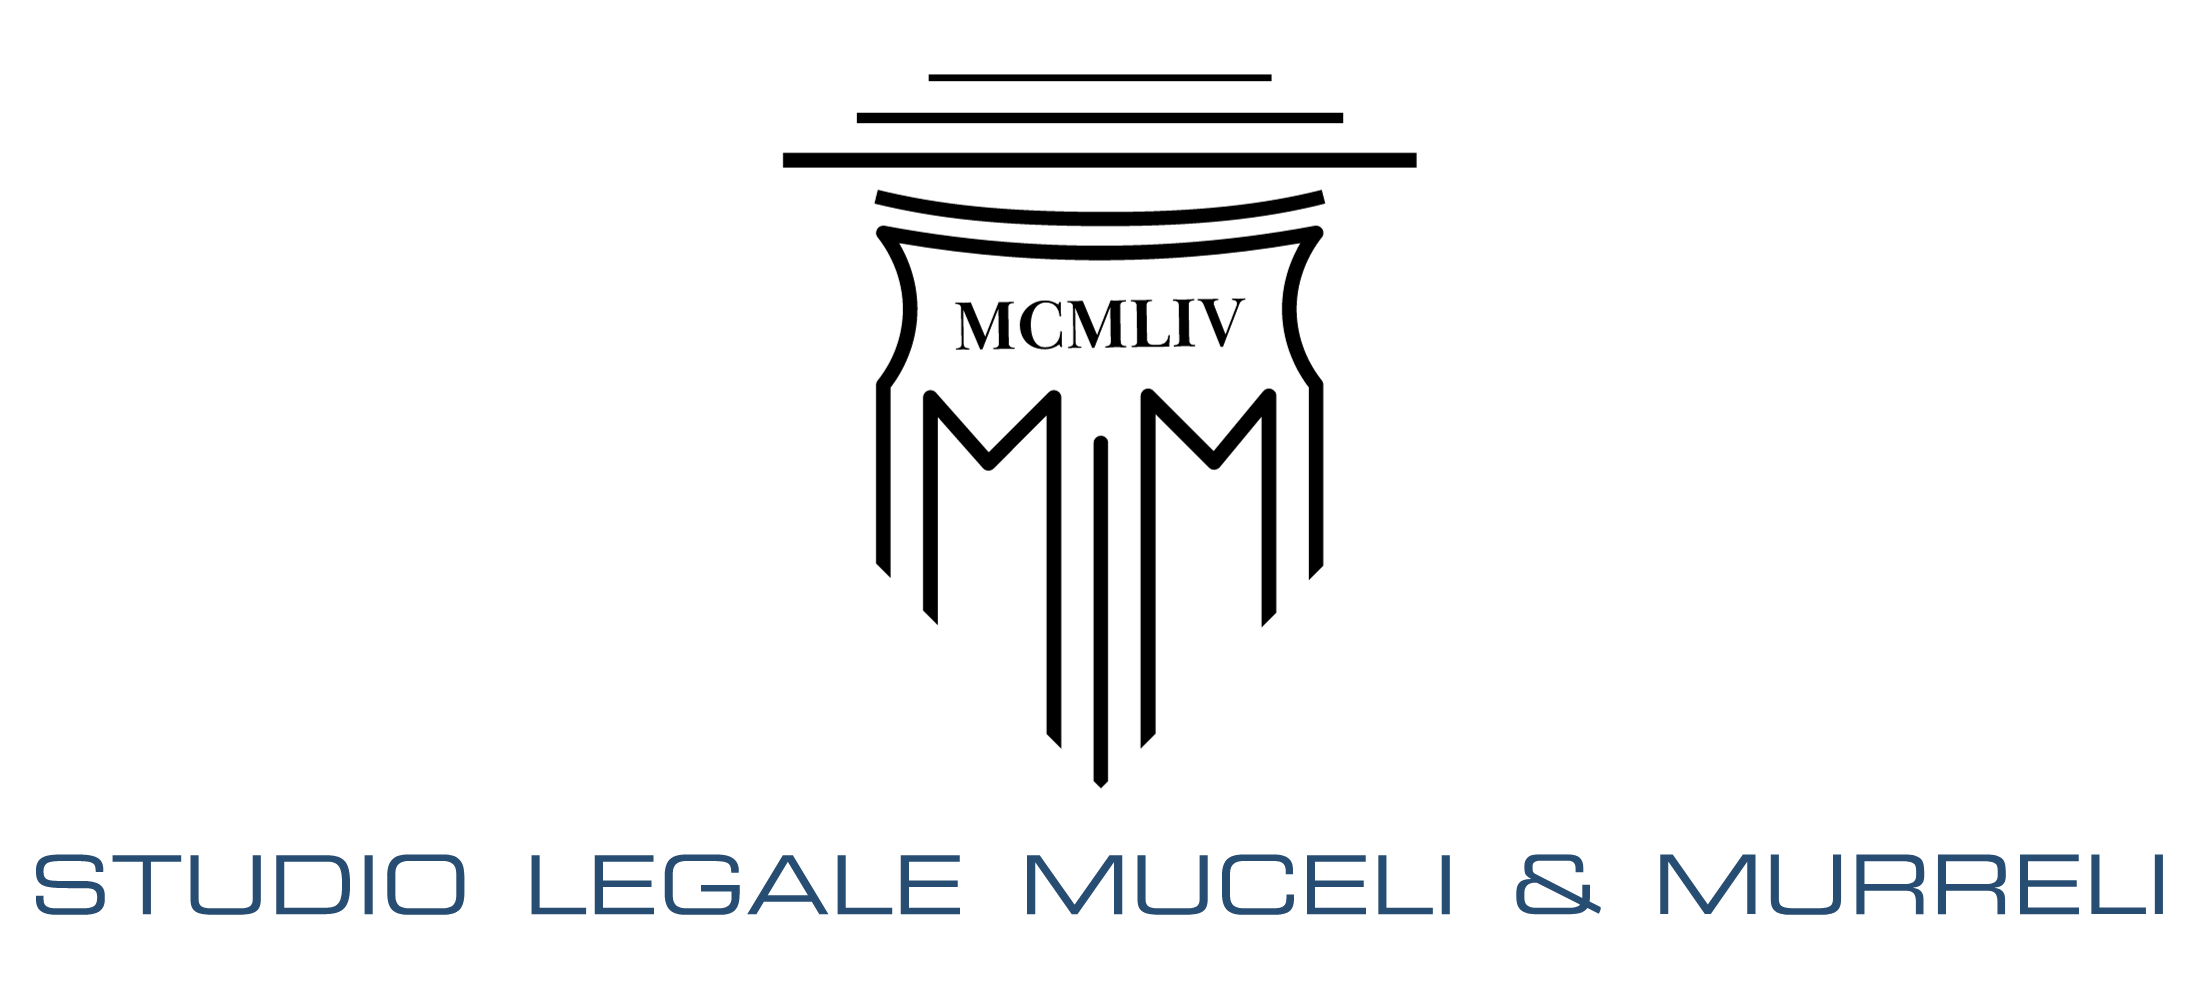 Studio legale Muceli & Murreli